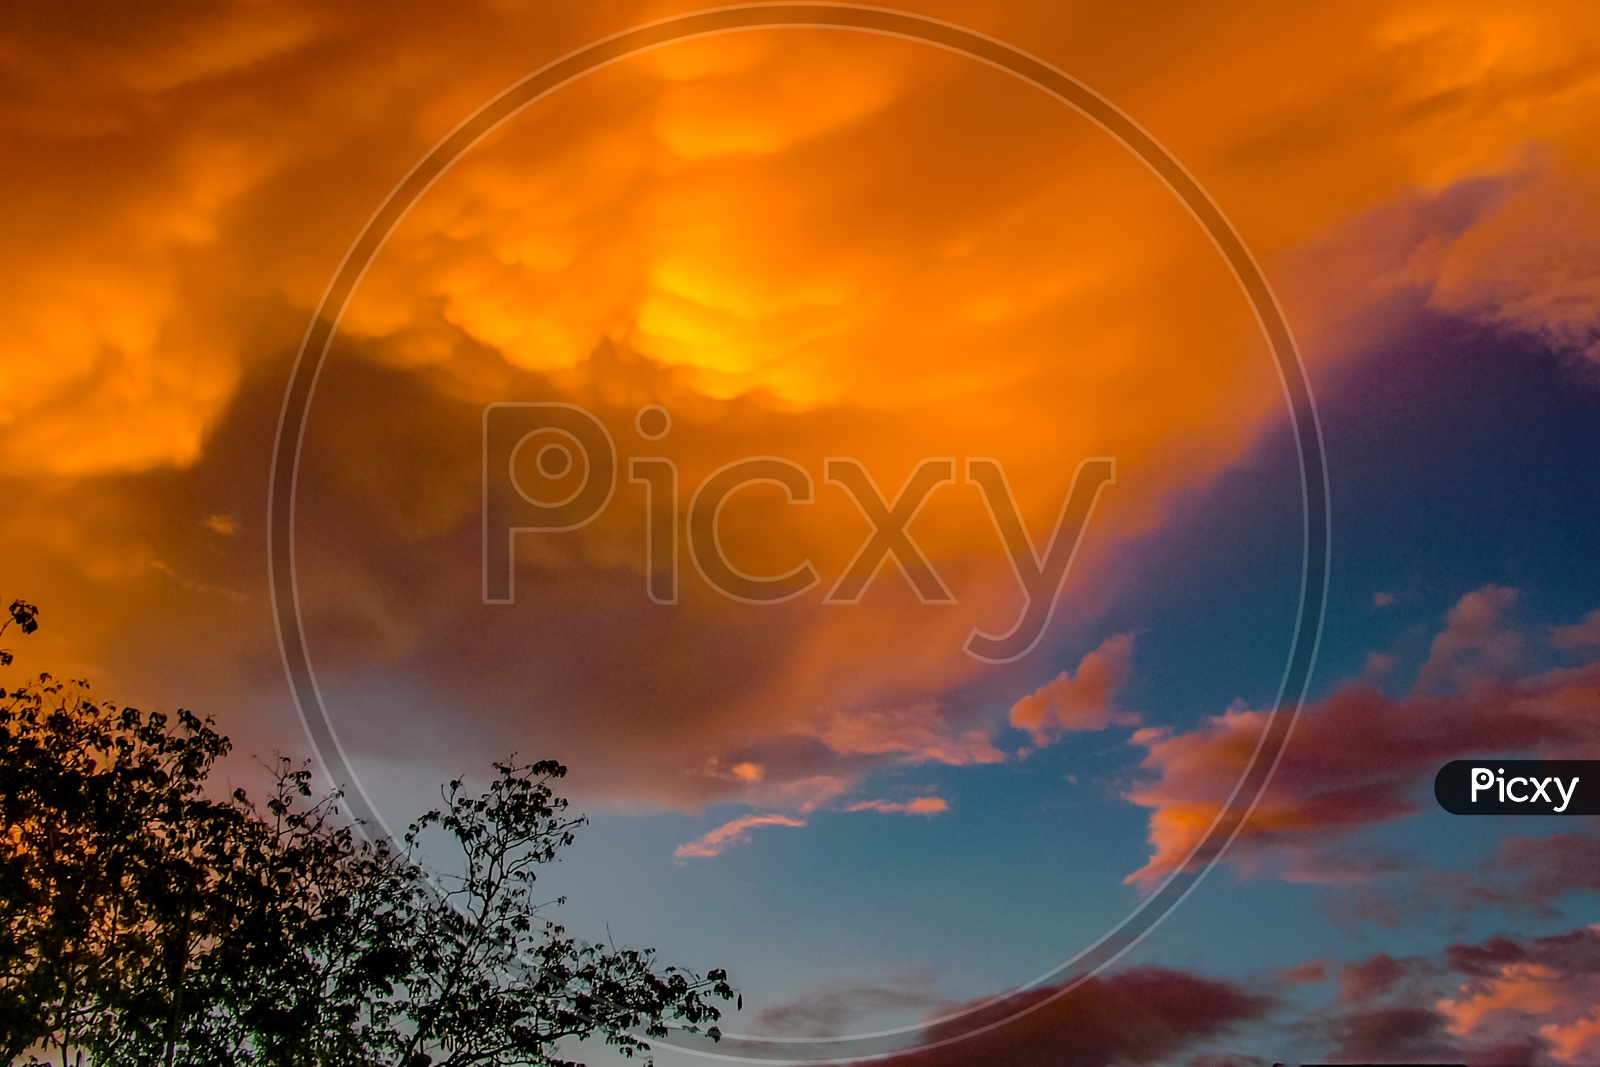 Orange clouds during sunrise or sunset